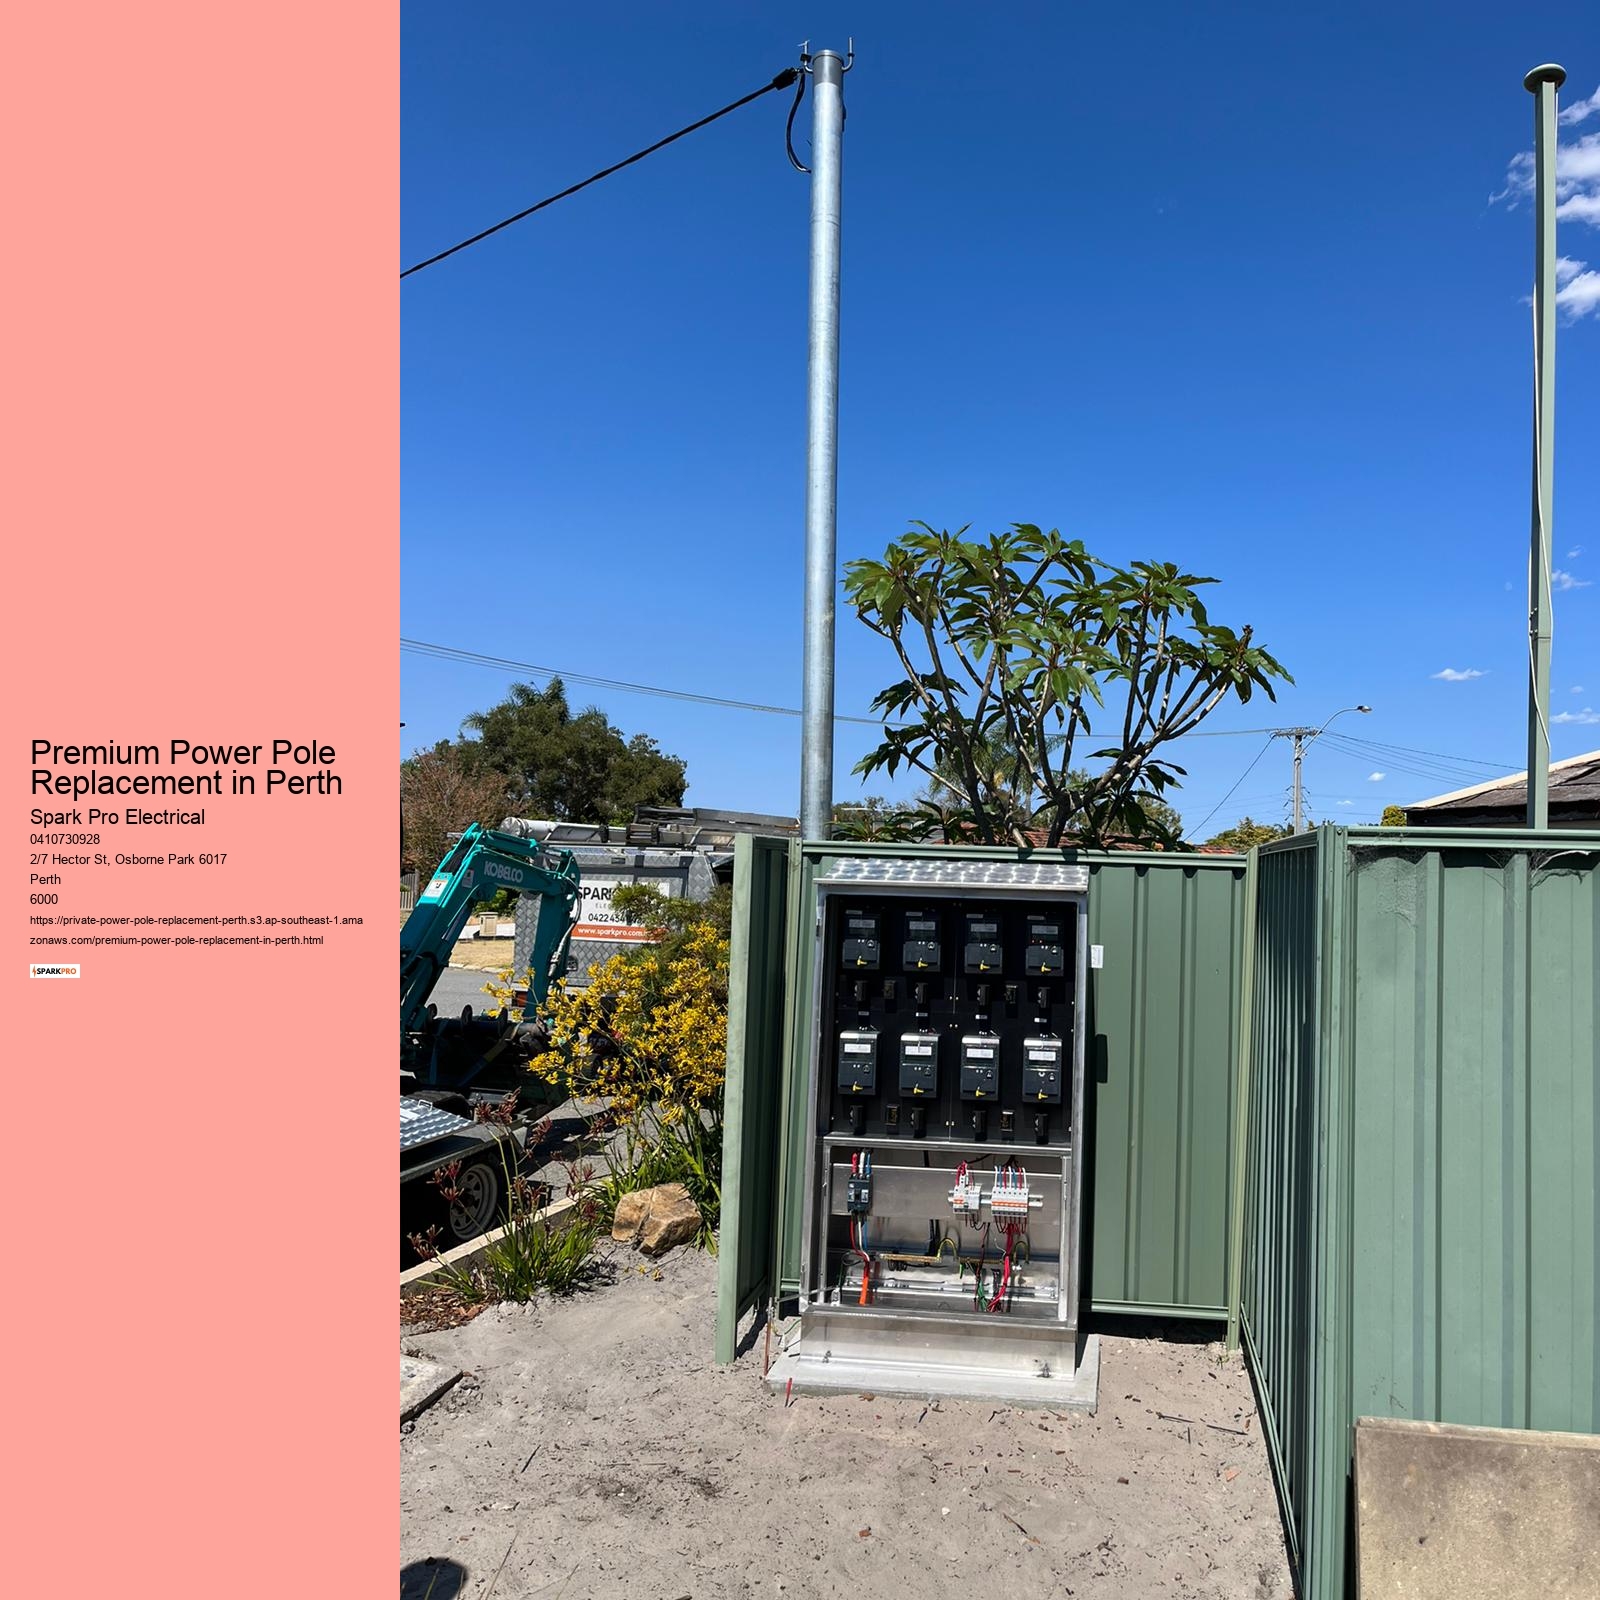 Premium Power Pole Replacement in Perth